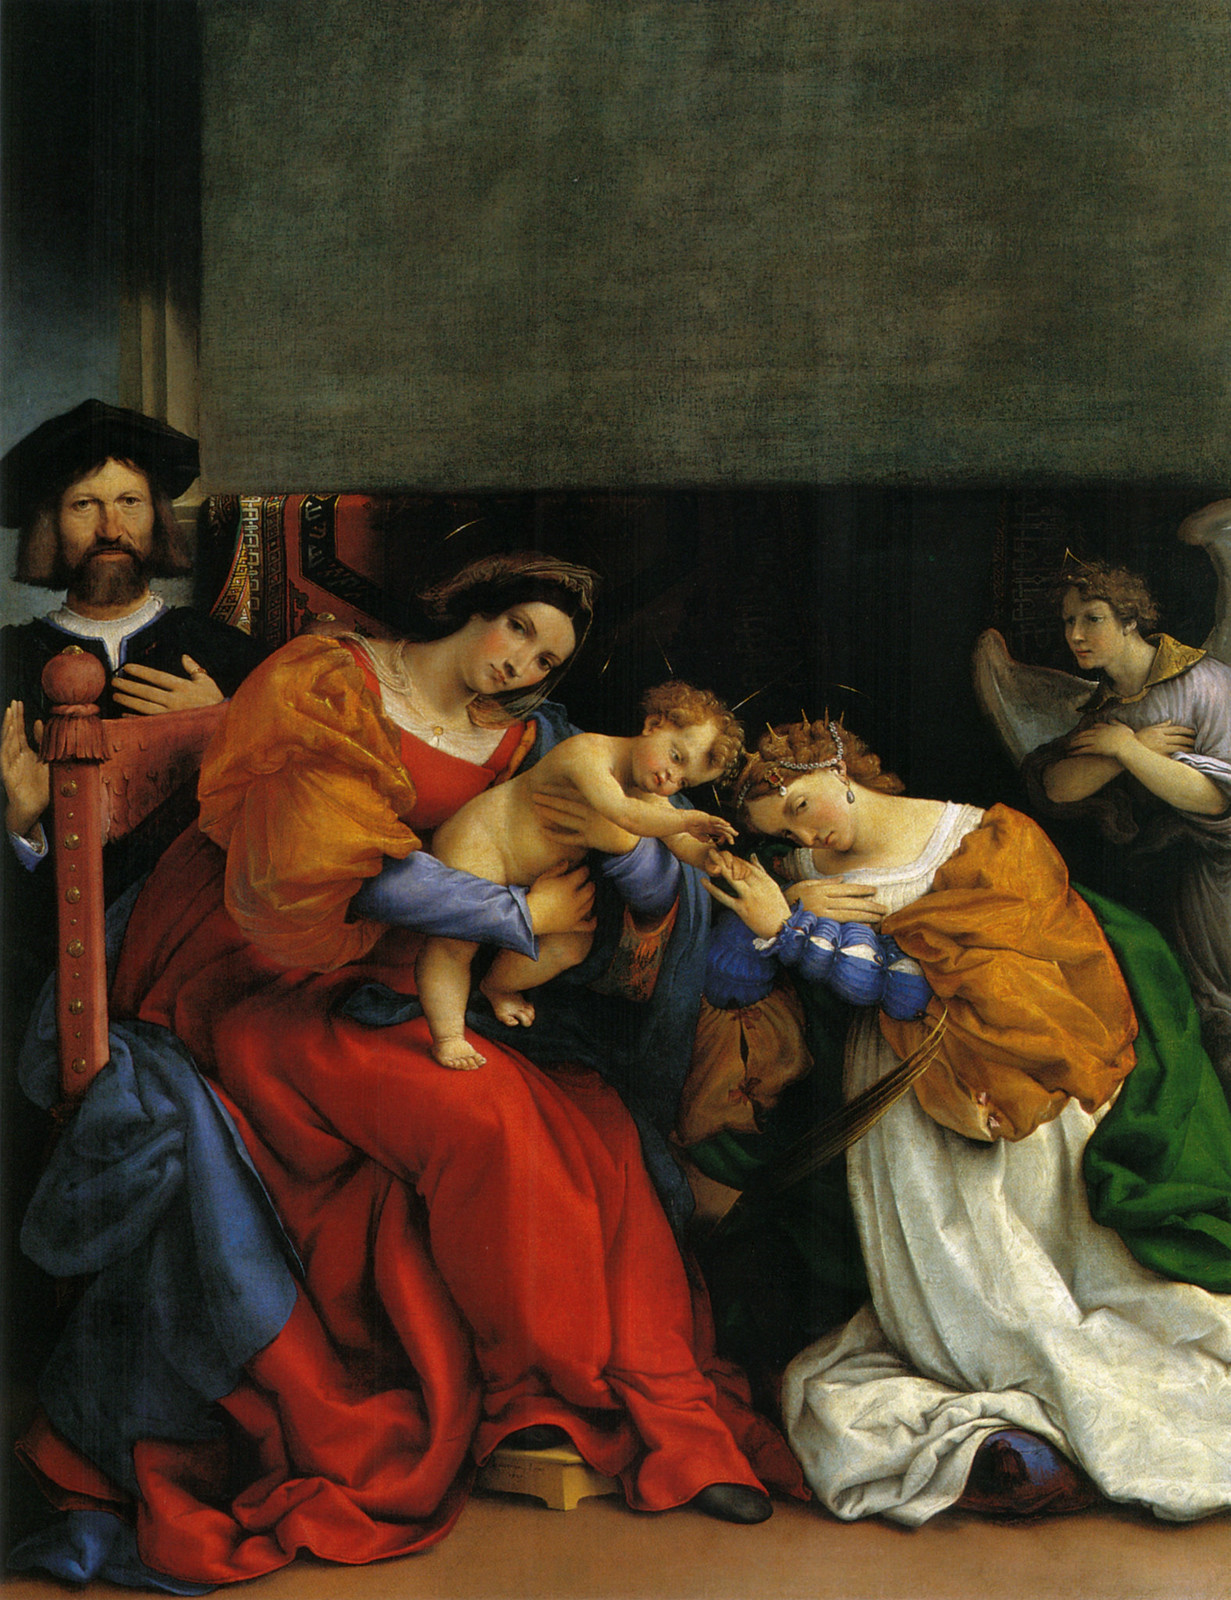 Bergamo, Accademia Carrara. Lorenzo Lotto, The Mystic Marriage of Saint Catherine of Alexandria, 1523. Courtesy adicorbetta, Milano